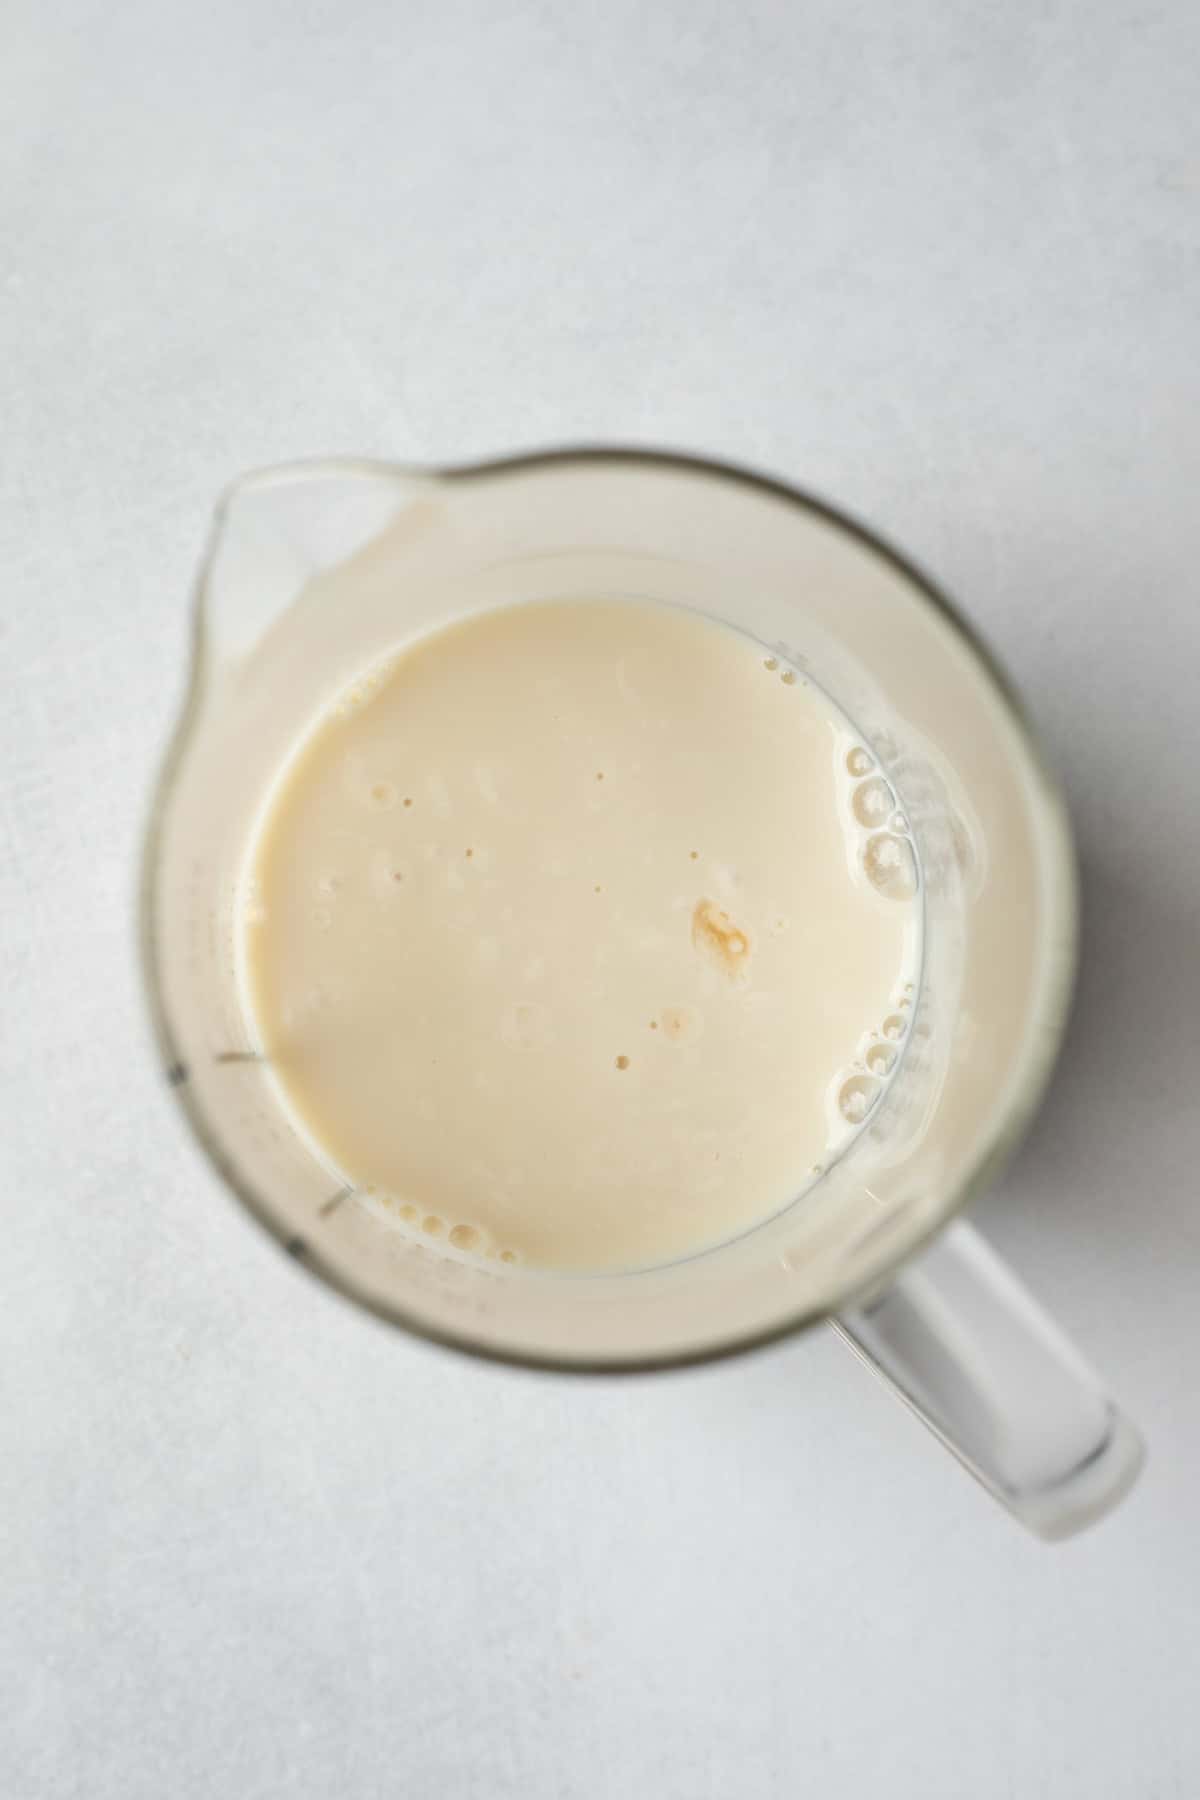 Non-dairy milk and vinegar combined to create vegan buttermilk.